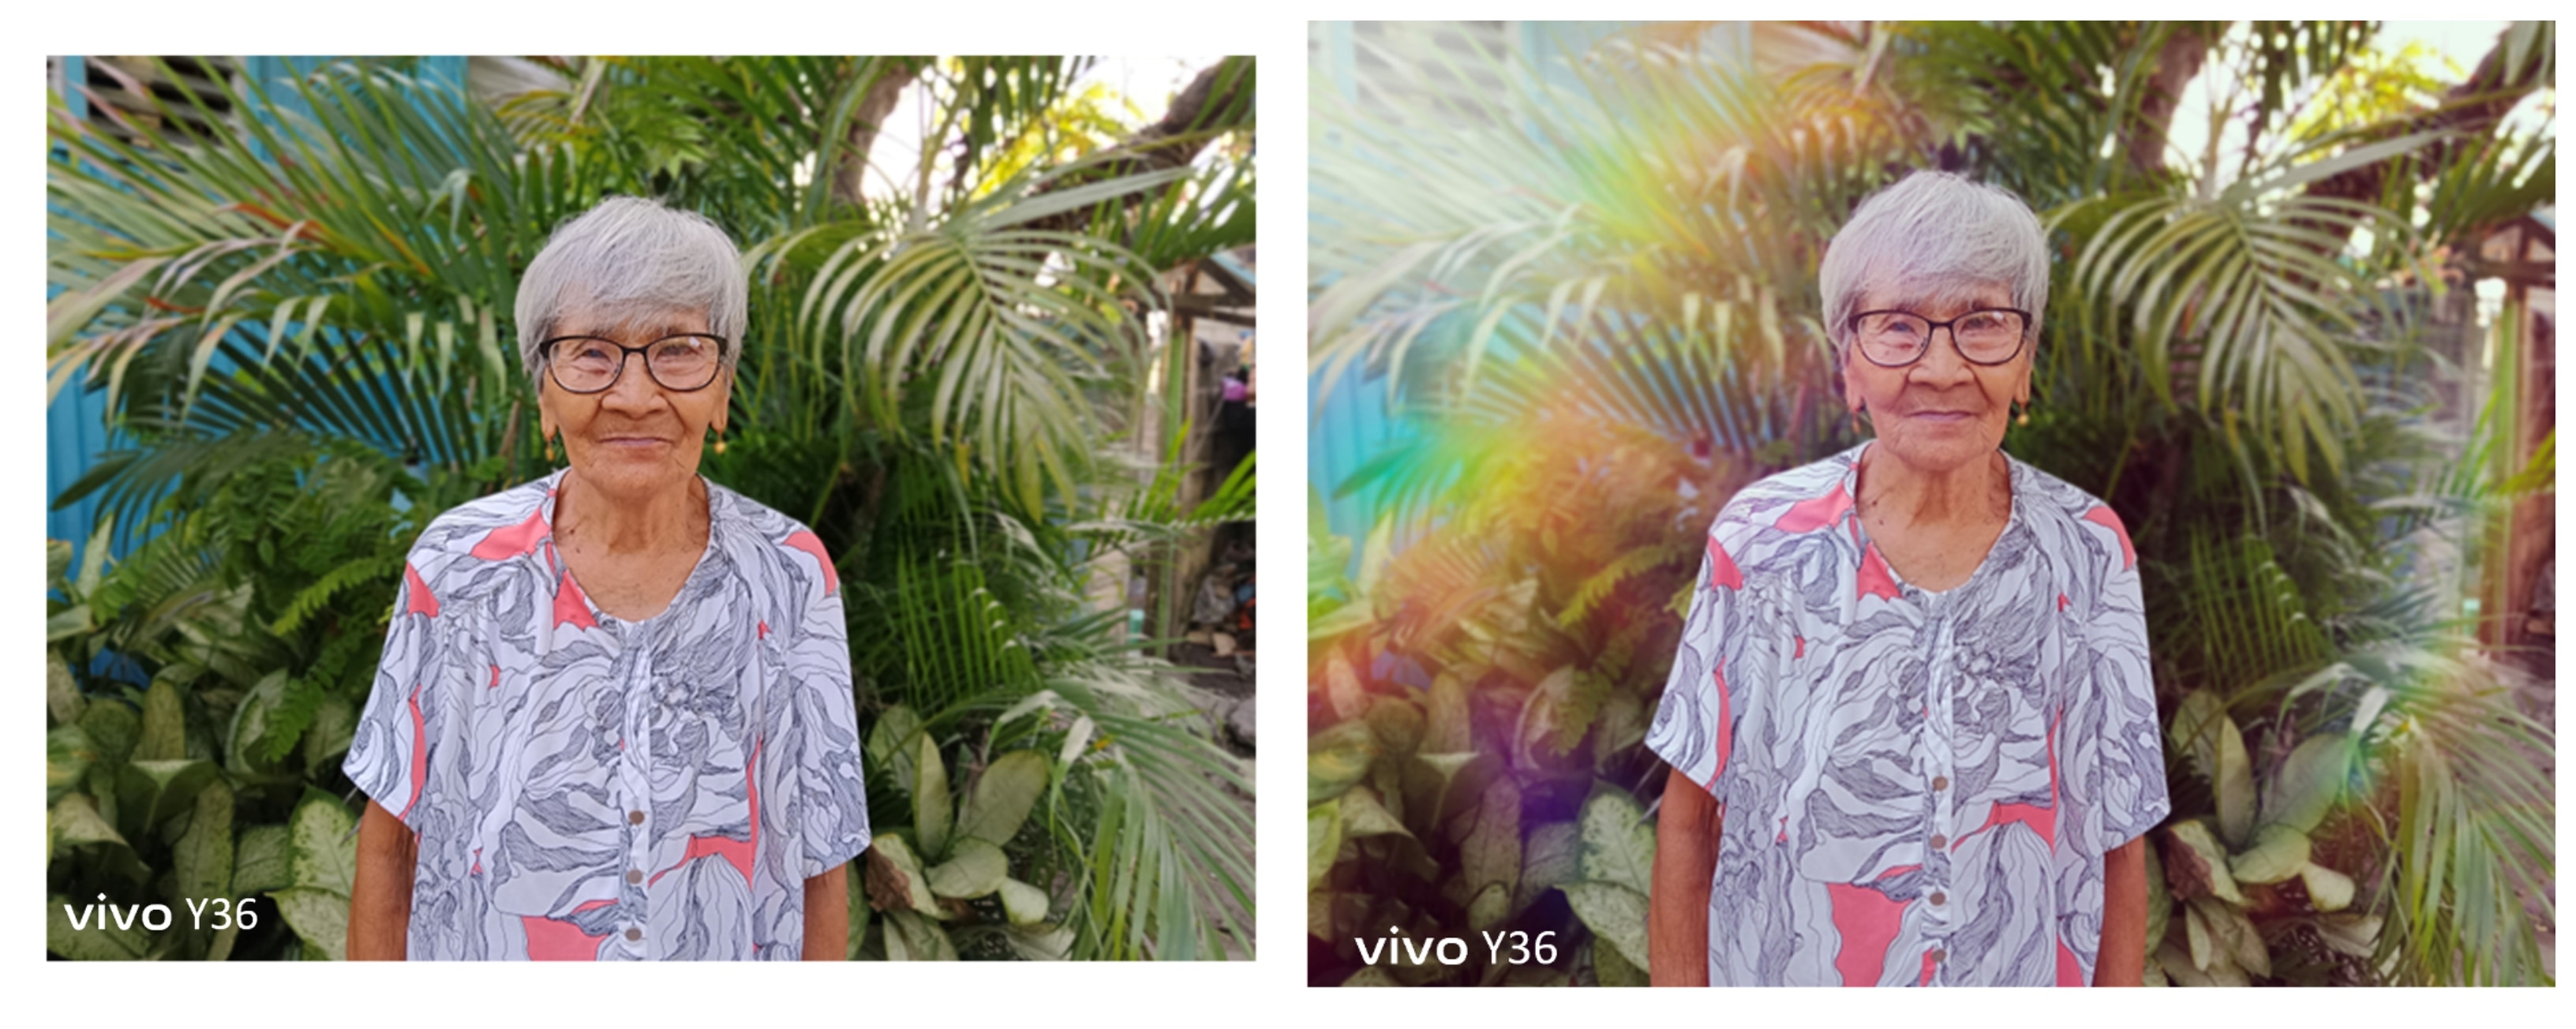 Normal Portrait vs. Portrait with Rainbow Light Effect. Photo source: vivo Philippines